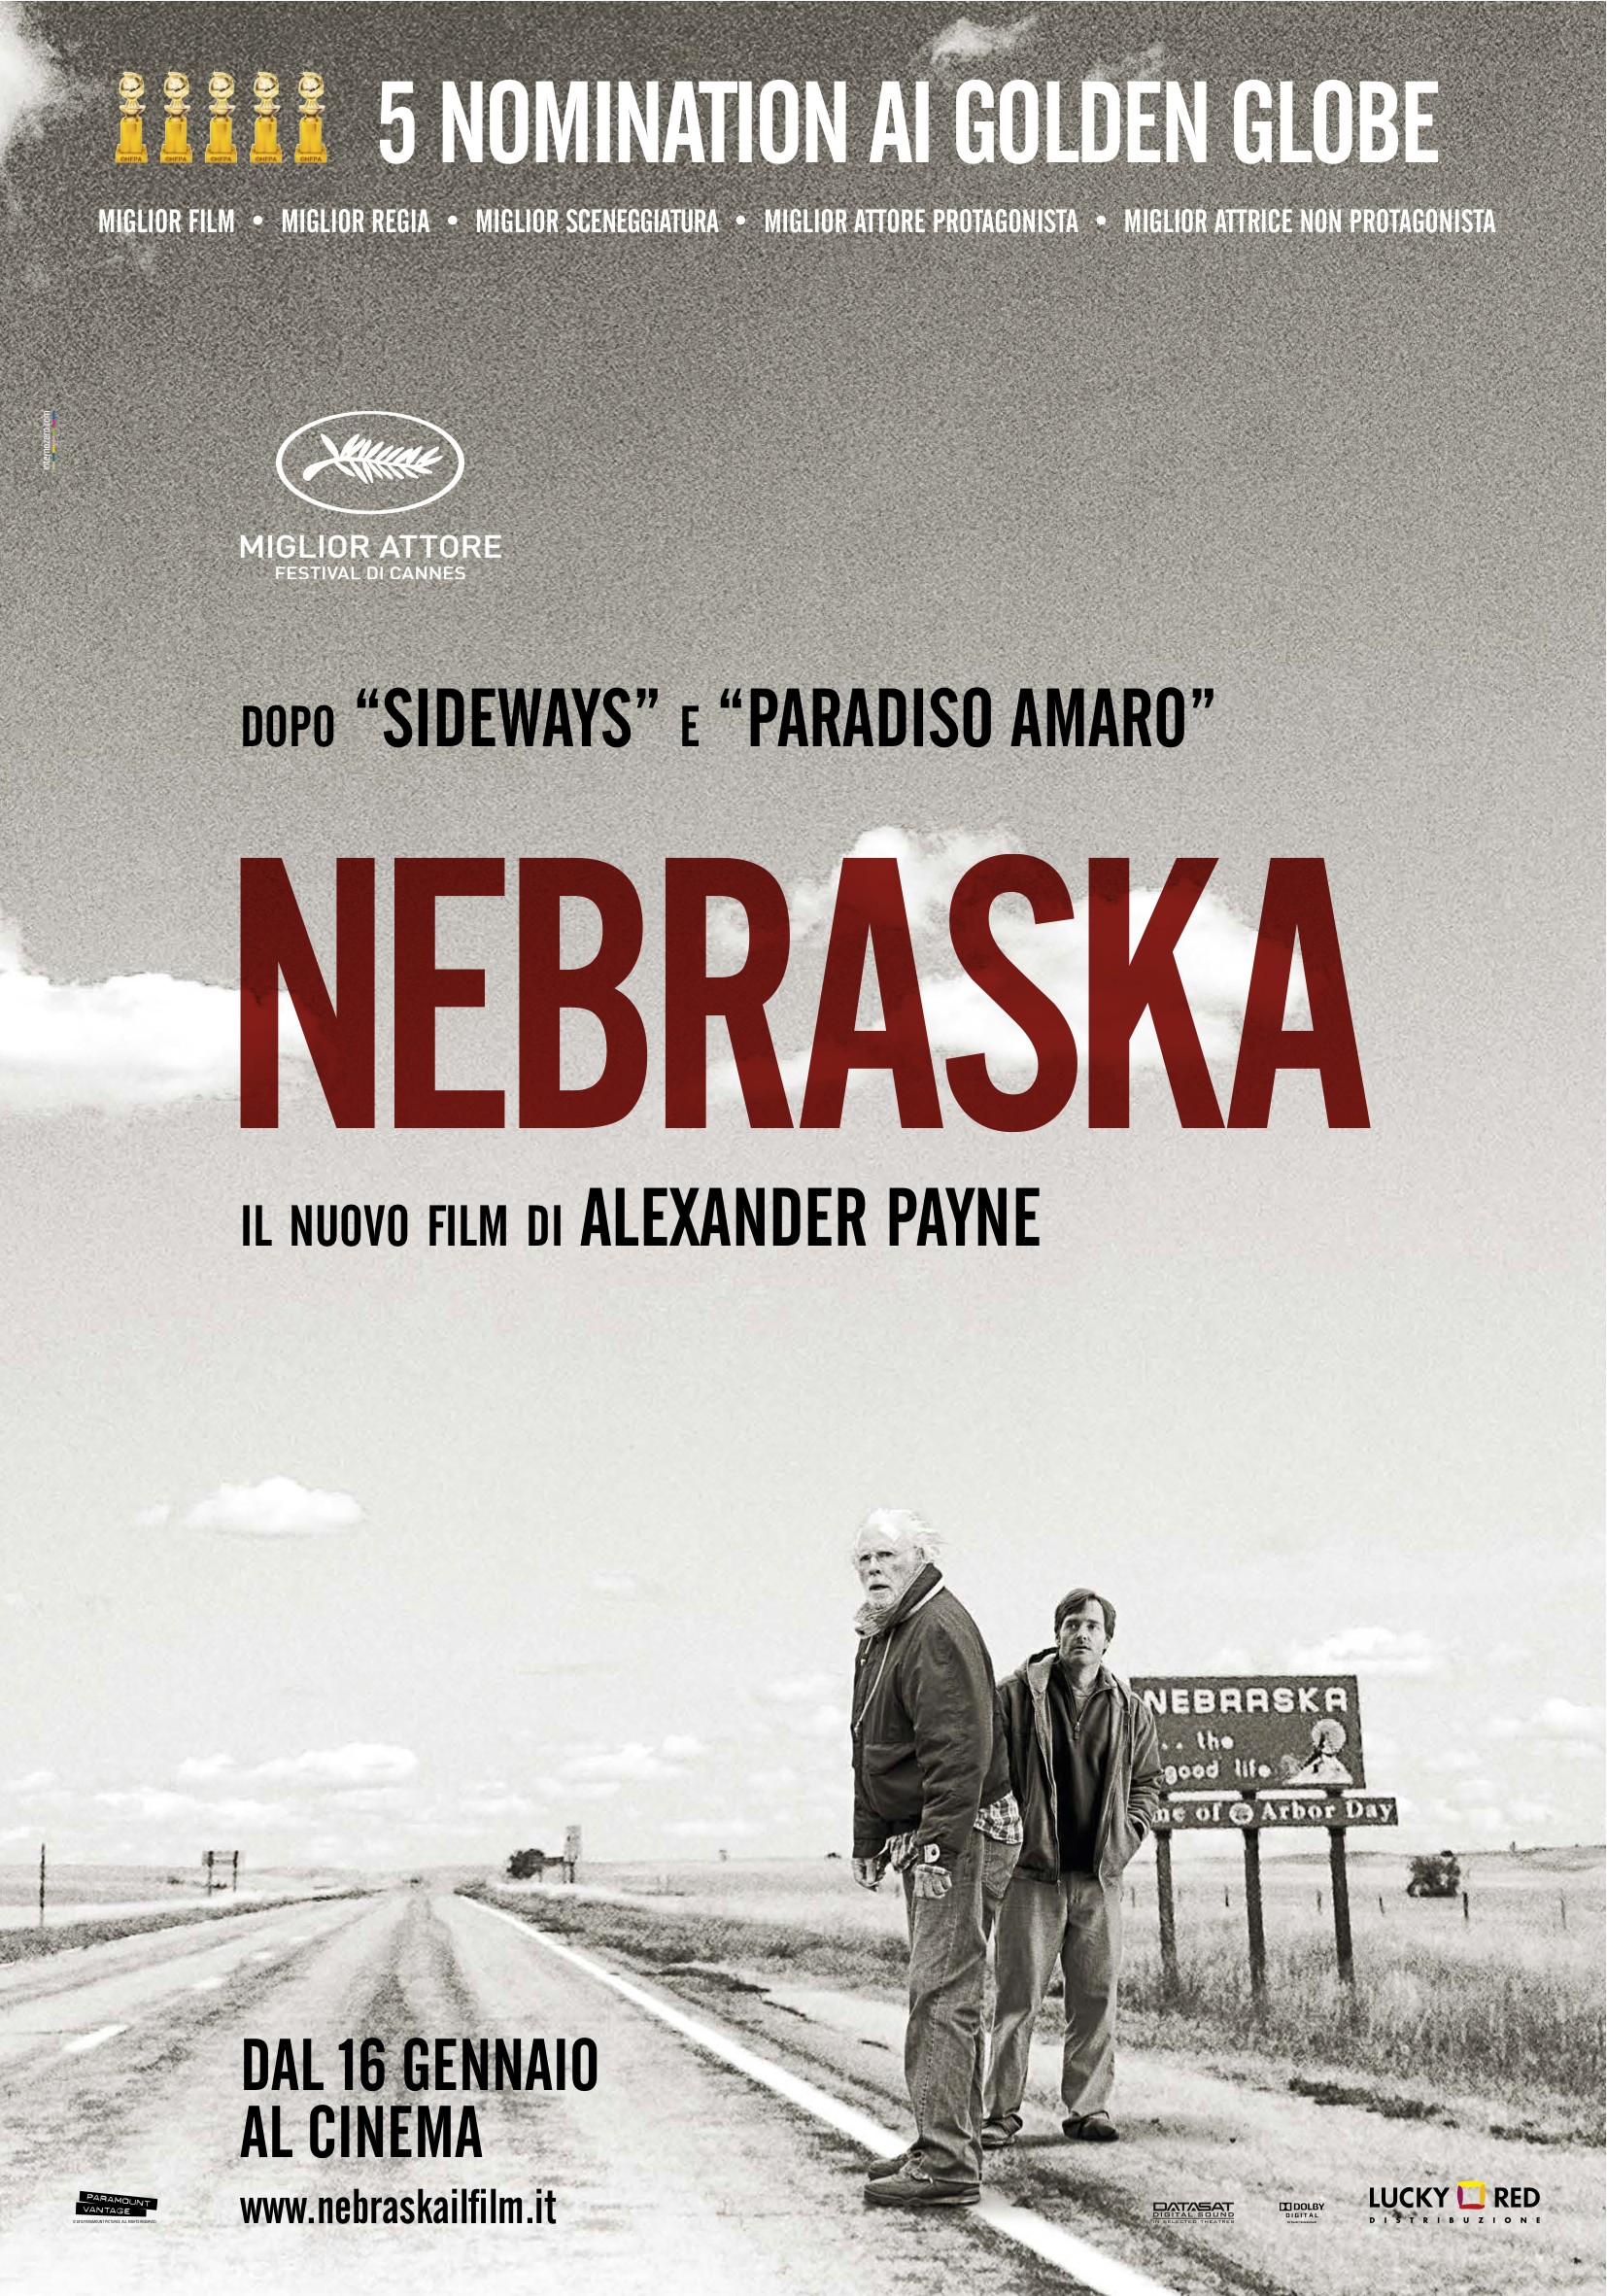 Mega Sized Movie Poster Image for Nebraska